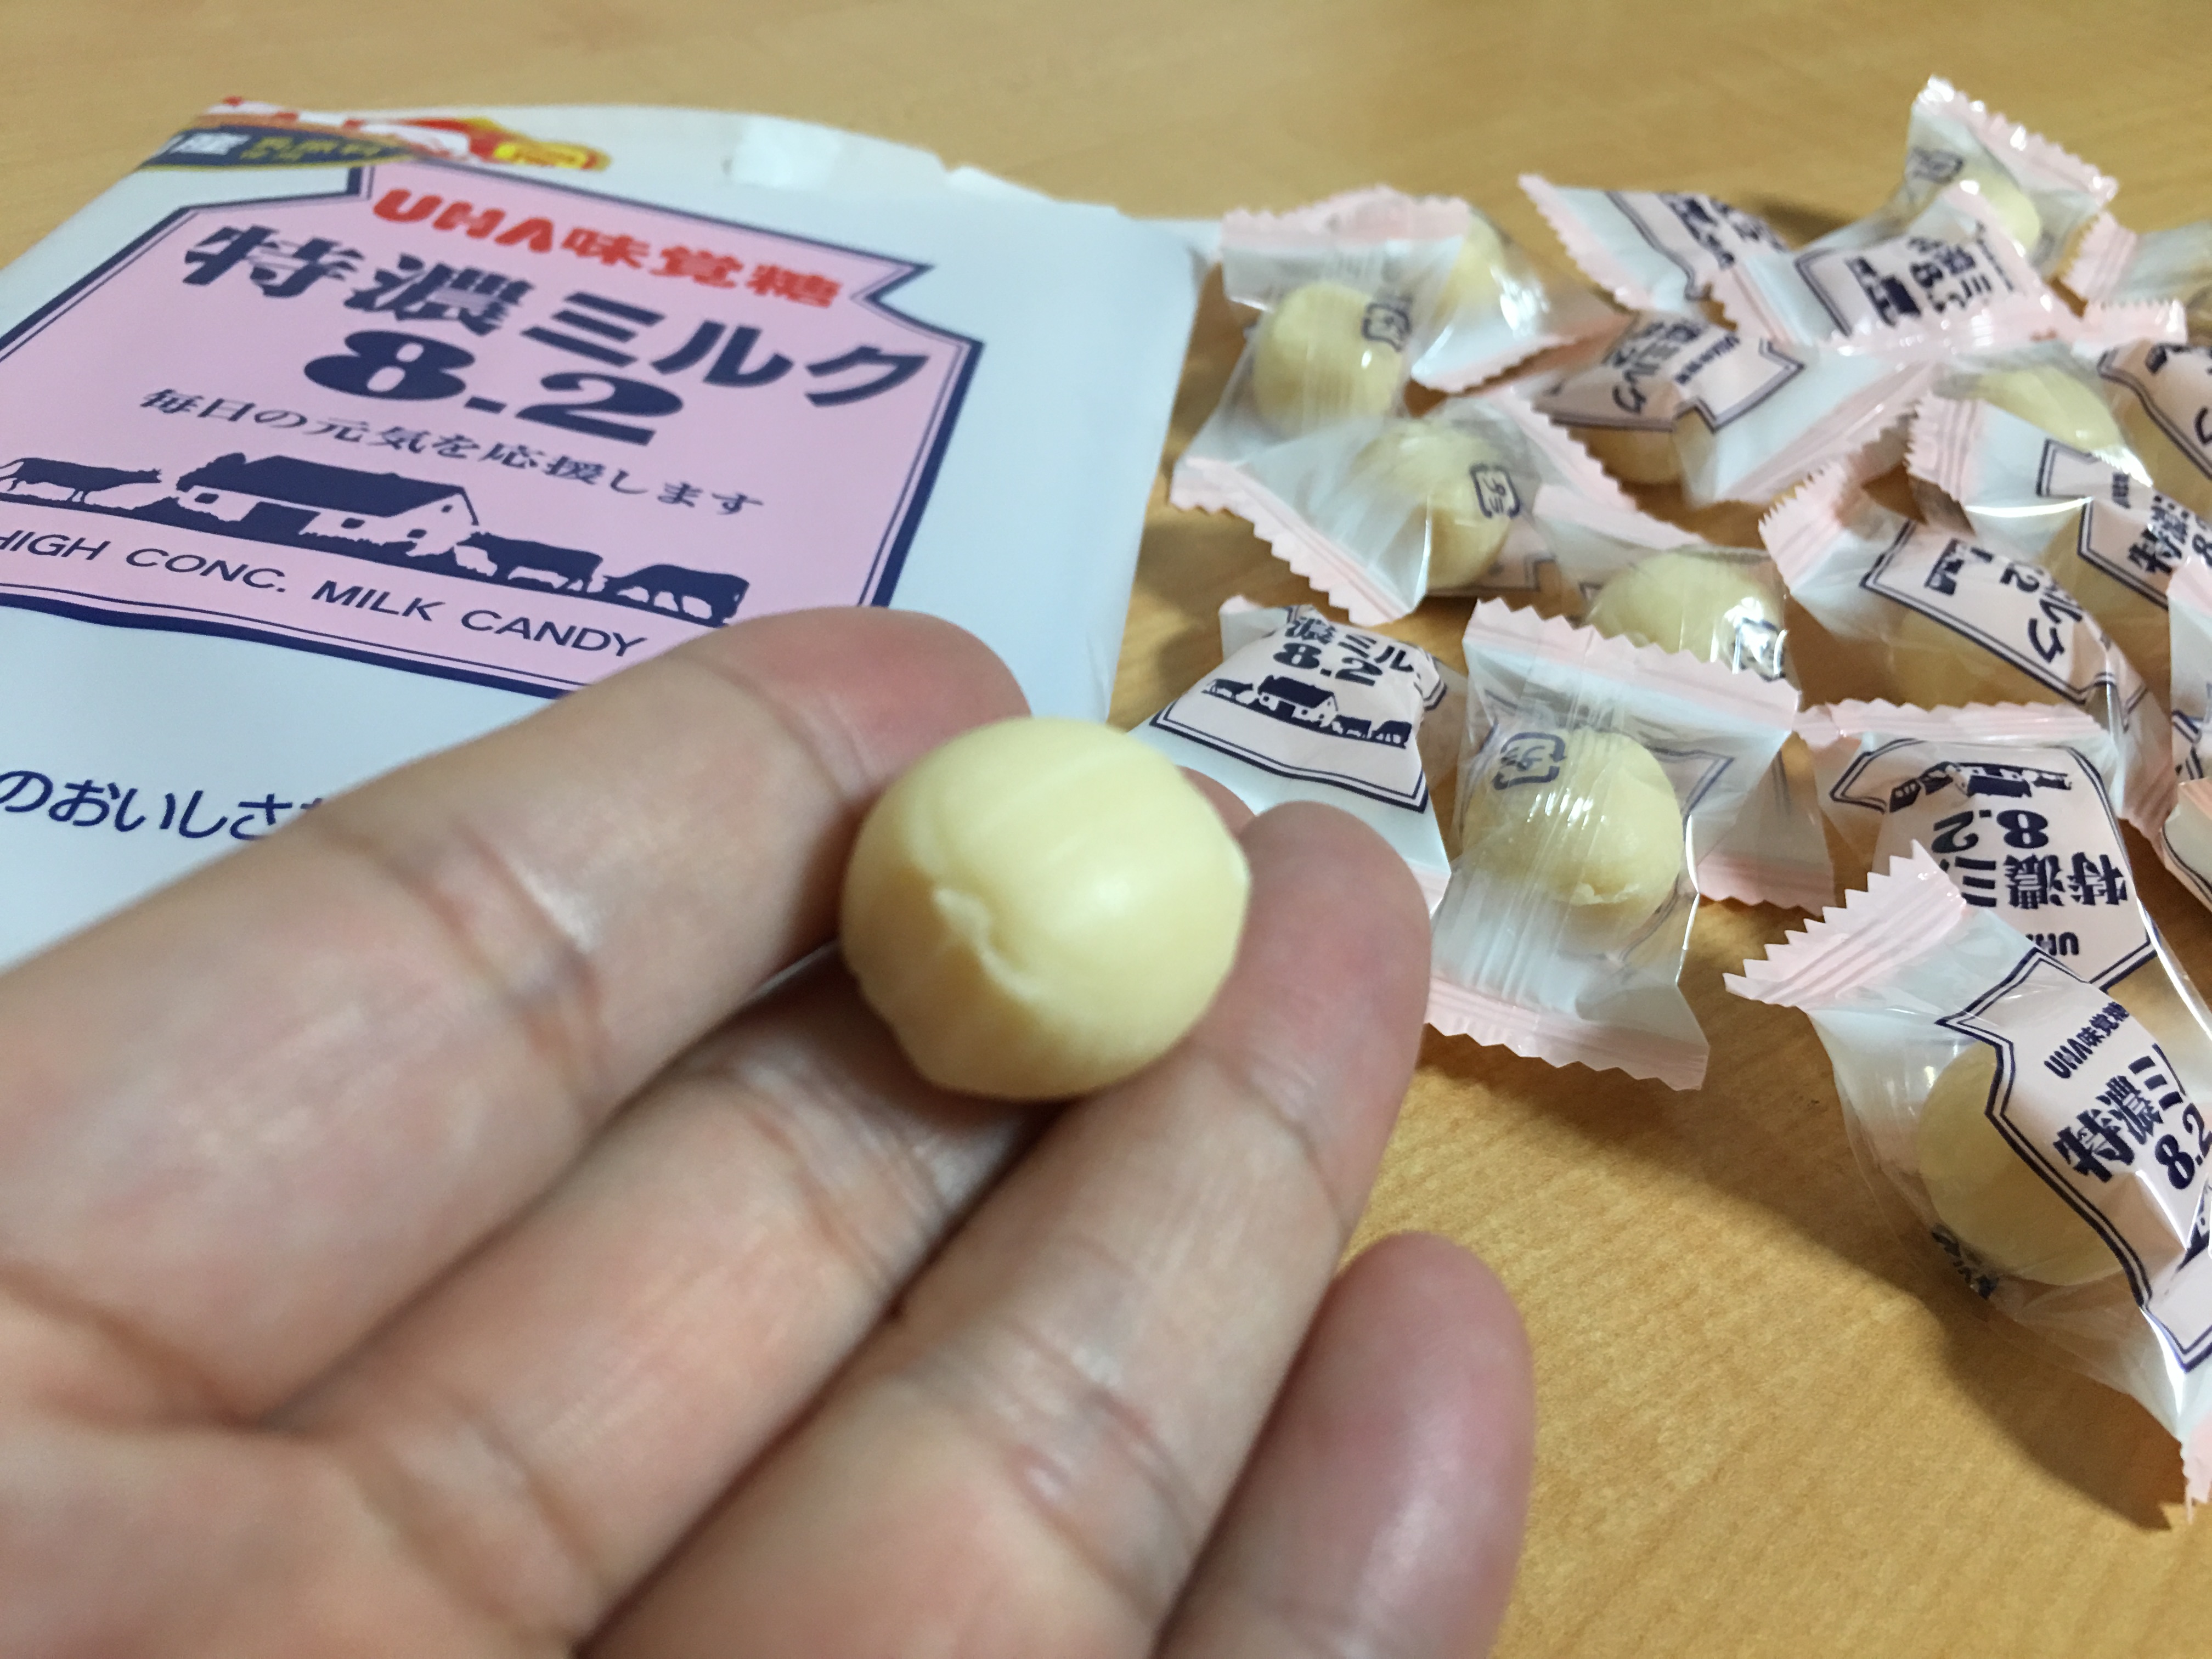 Tokuno Milk UHA Mikakuto S Popular Milk Candy Recommendation Of Unique Japanese Products